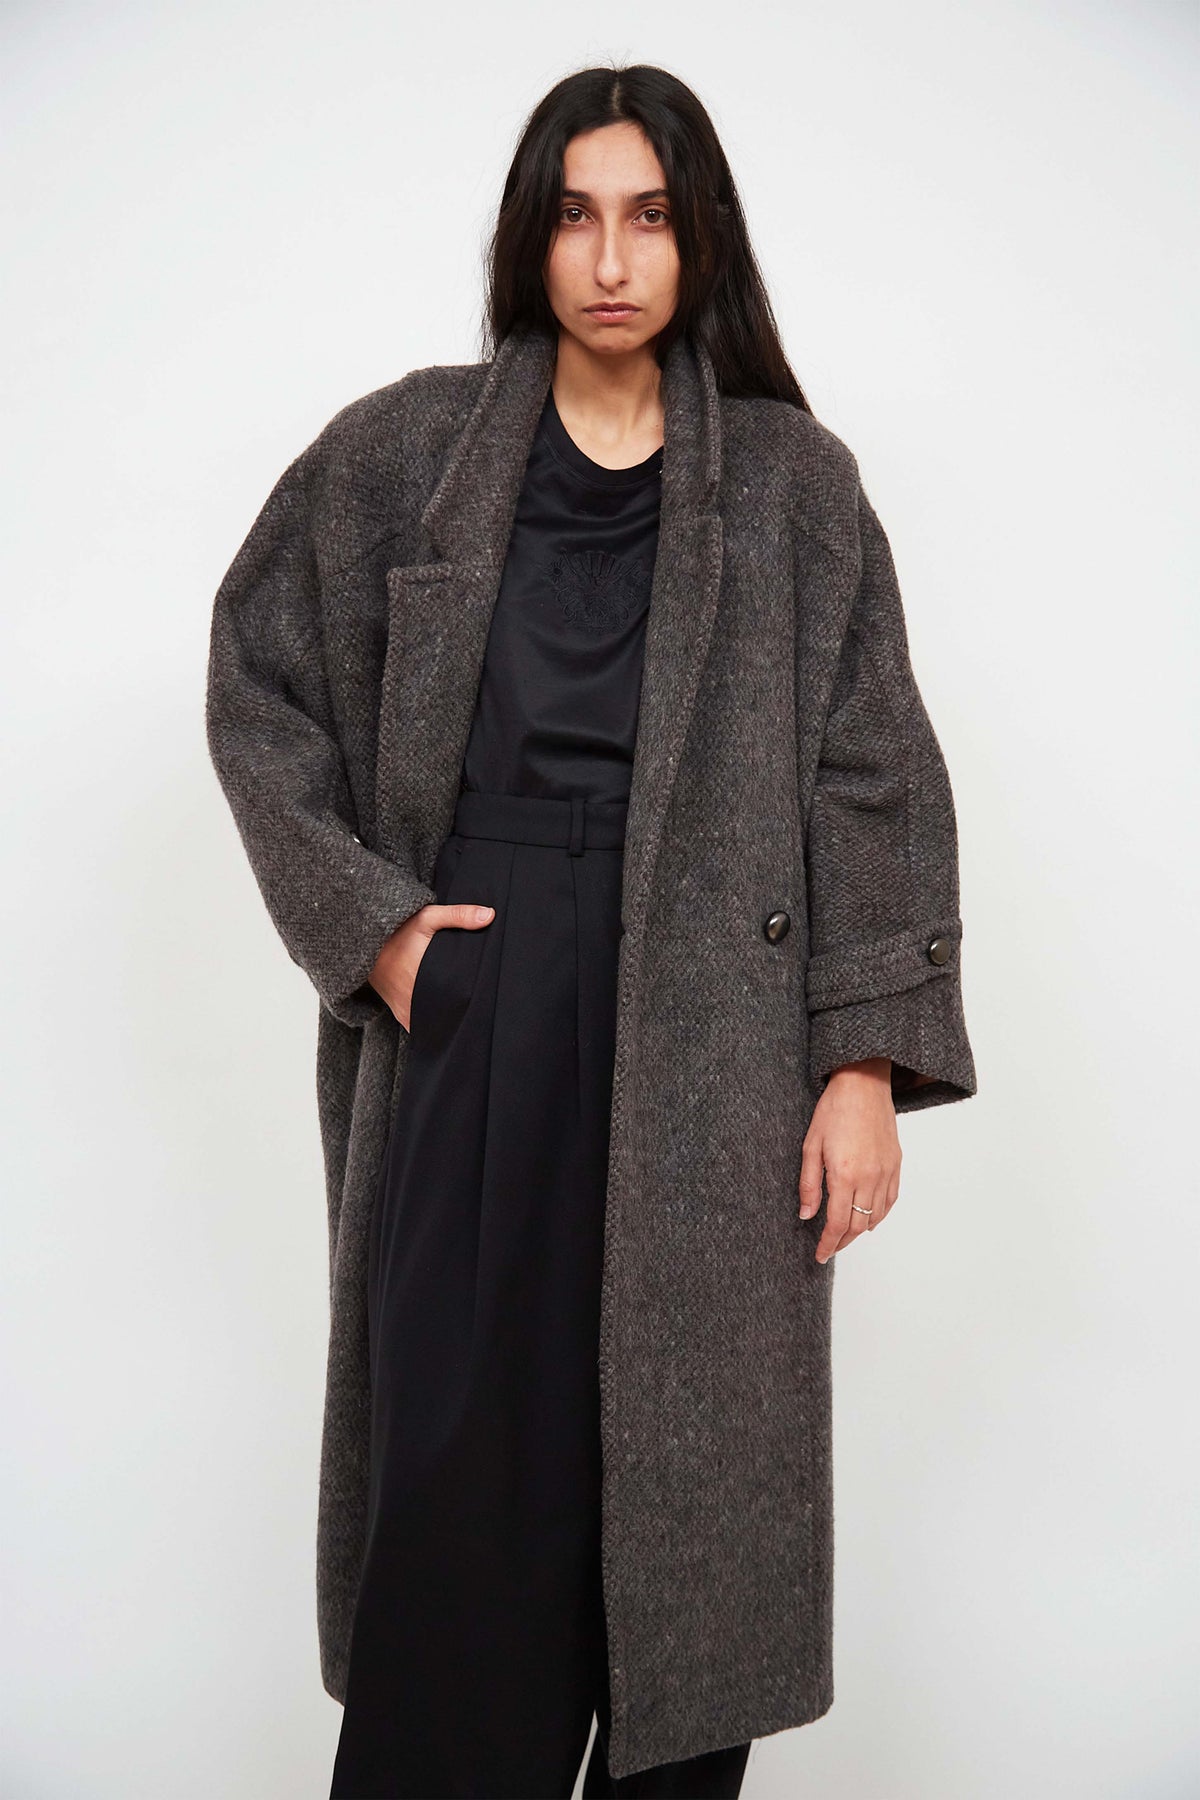 Chloe wool coat